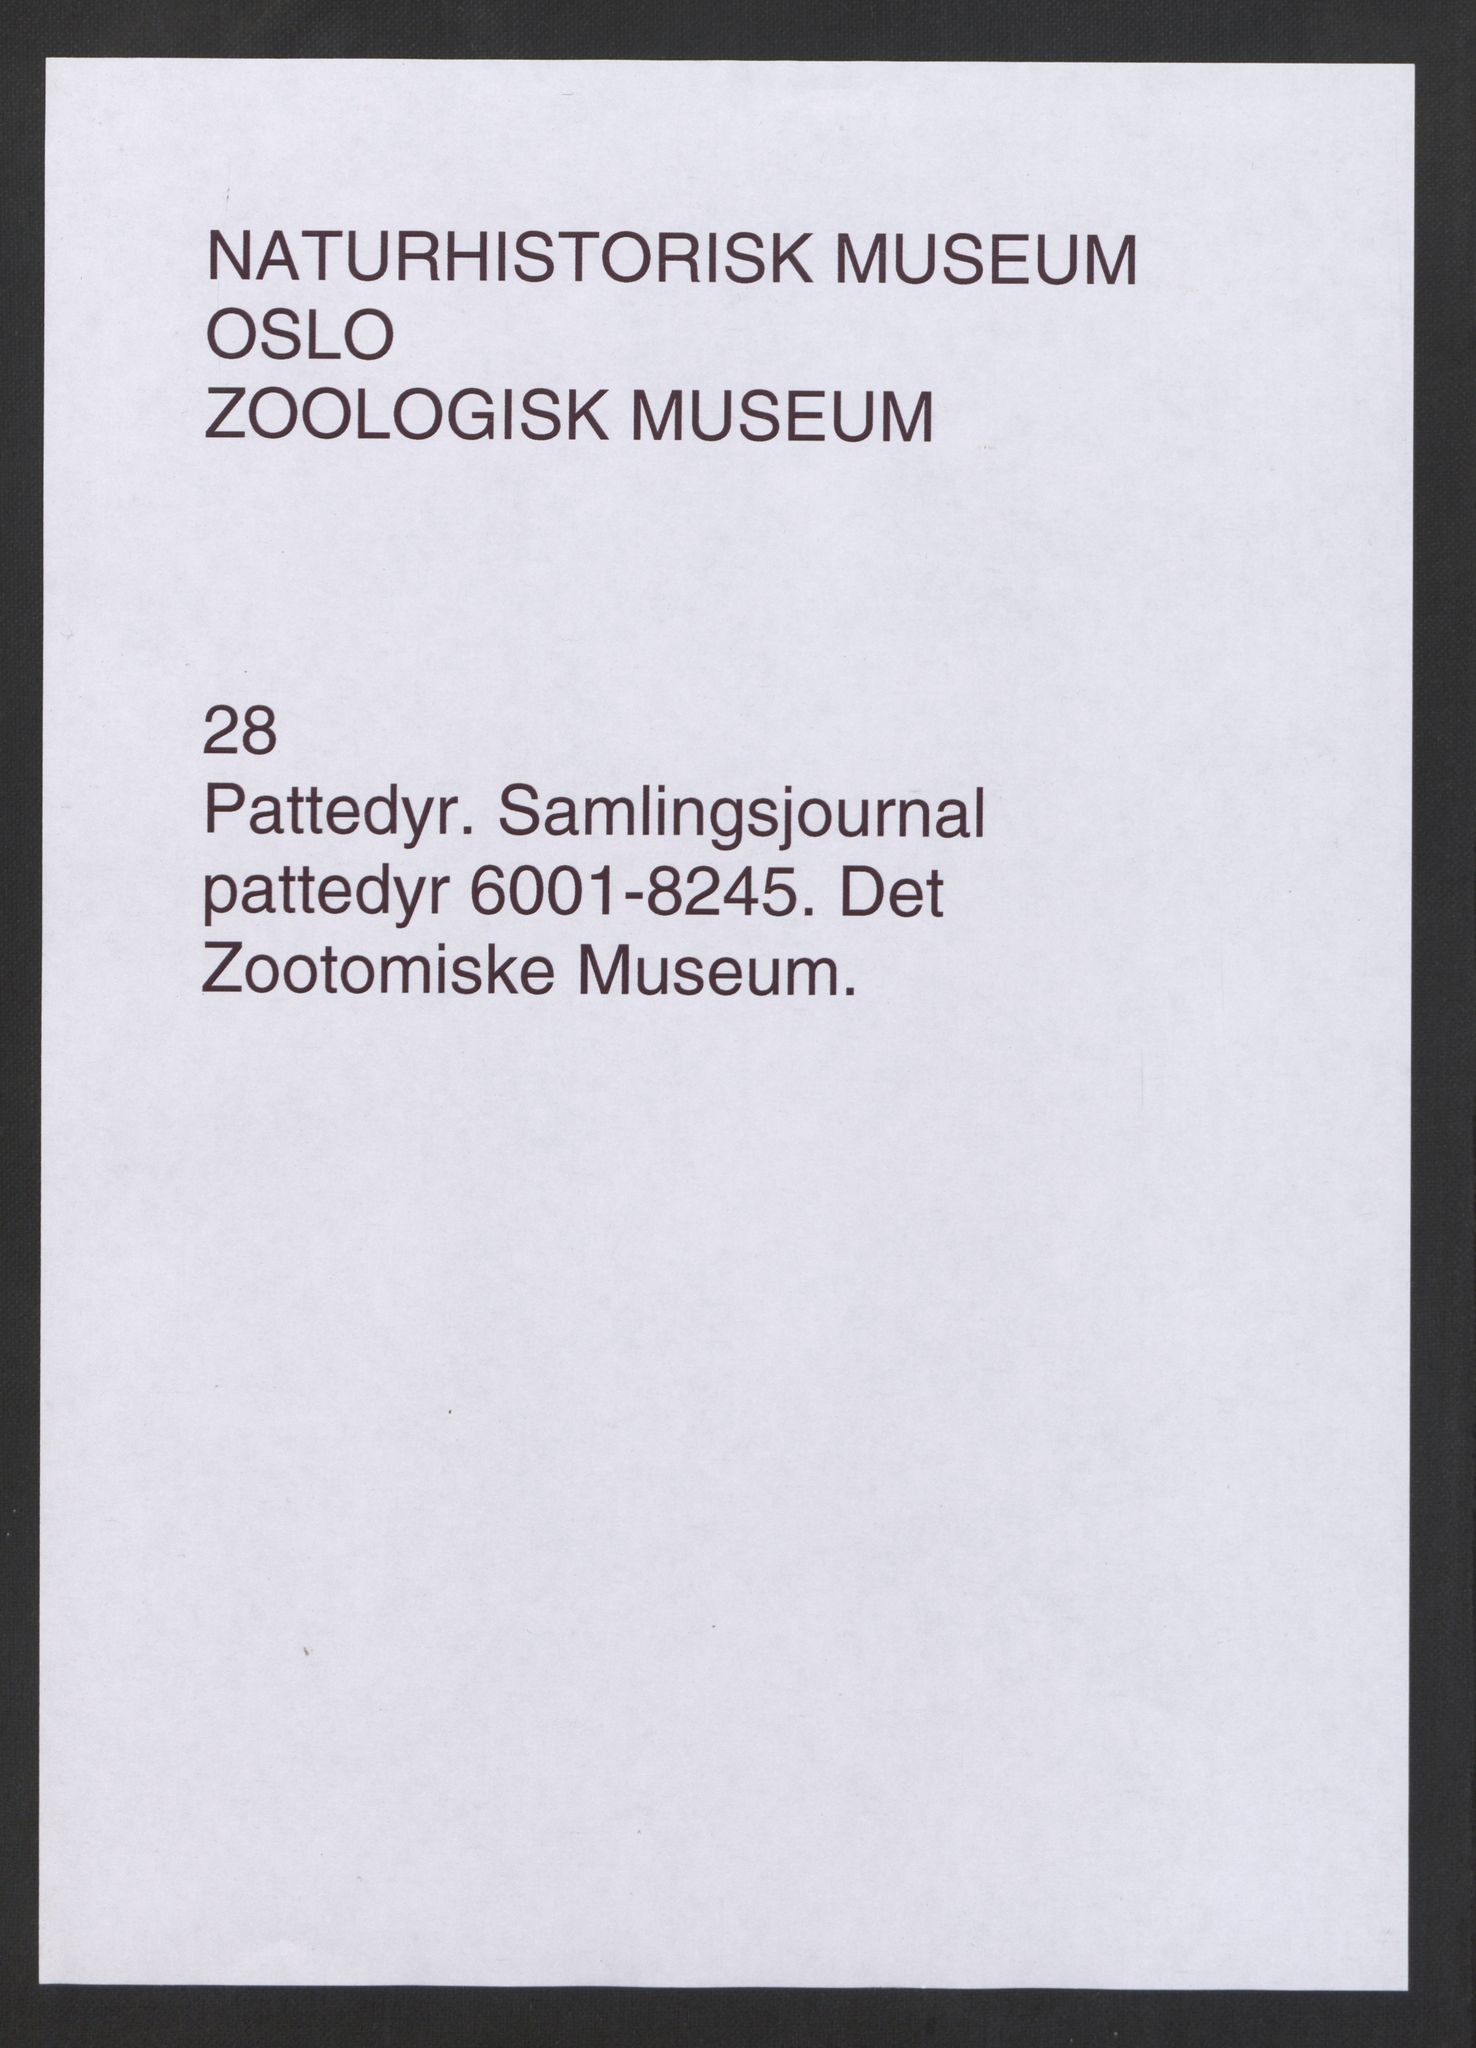 Naturhistorisk museum (Oslo), NHMO/-/4